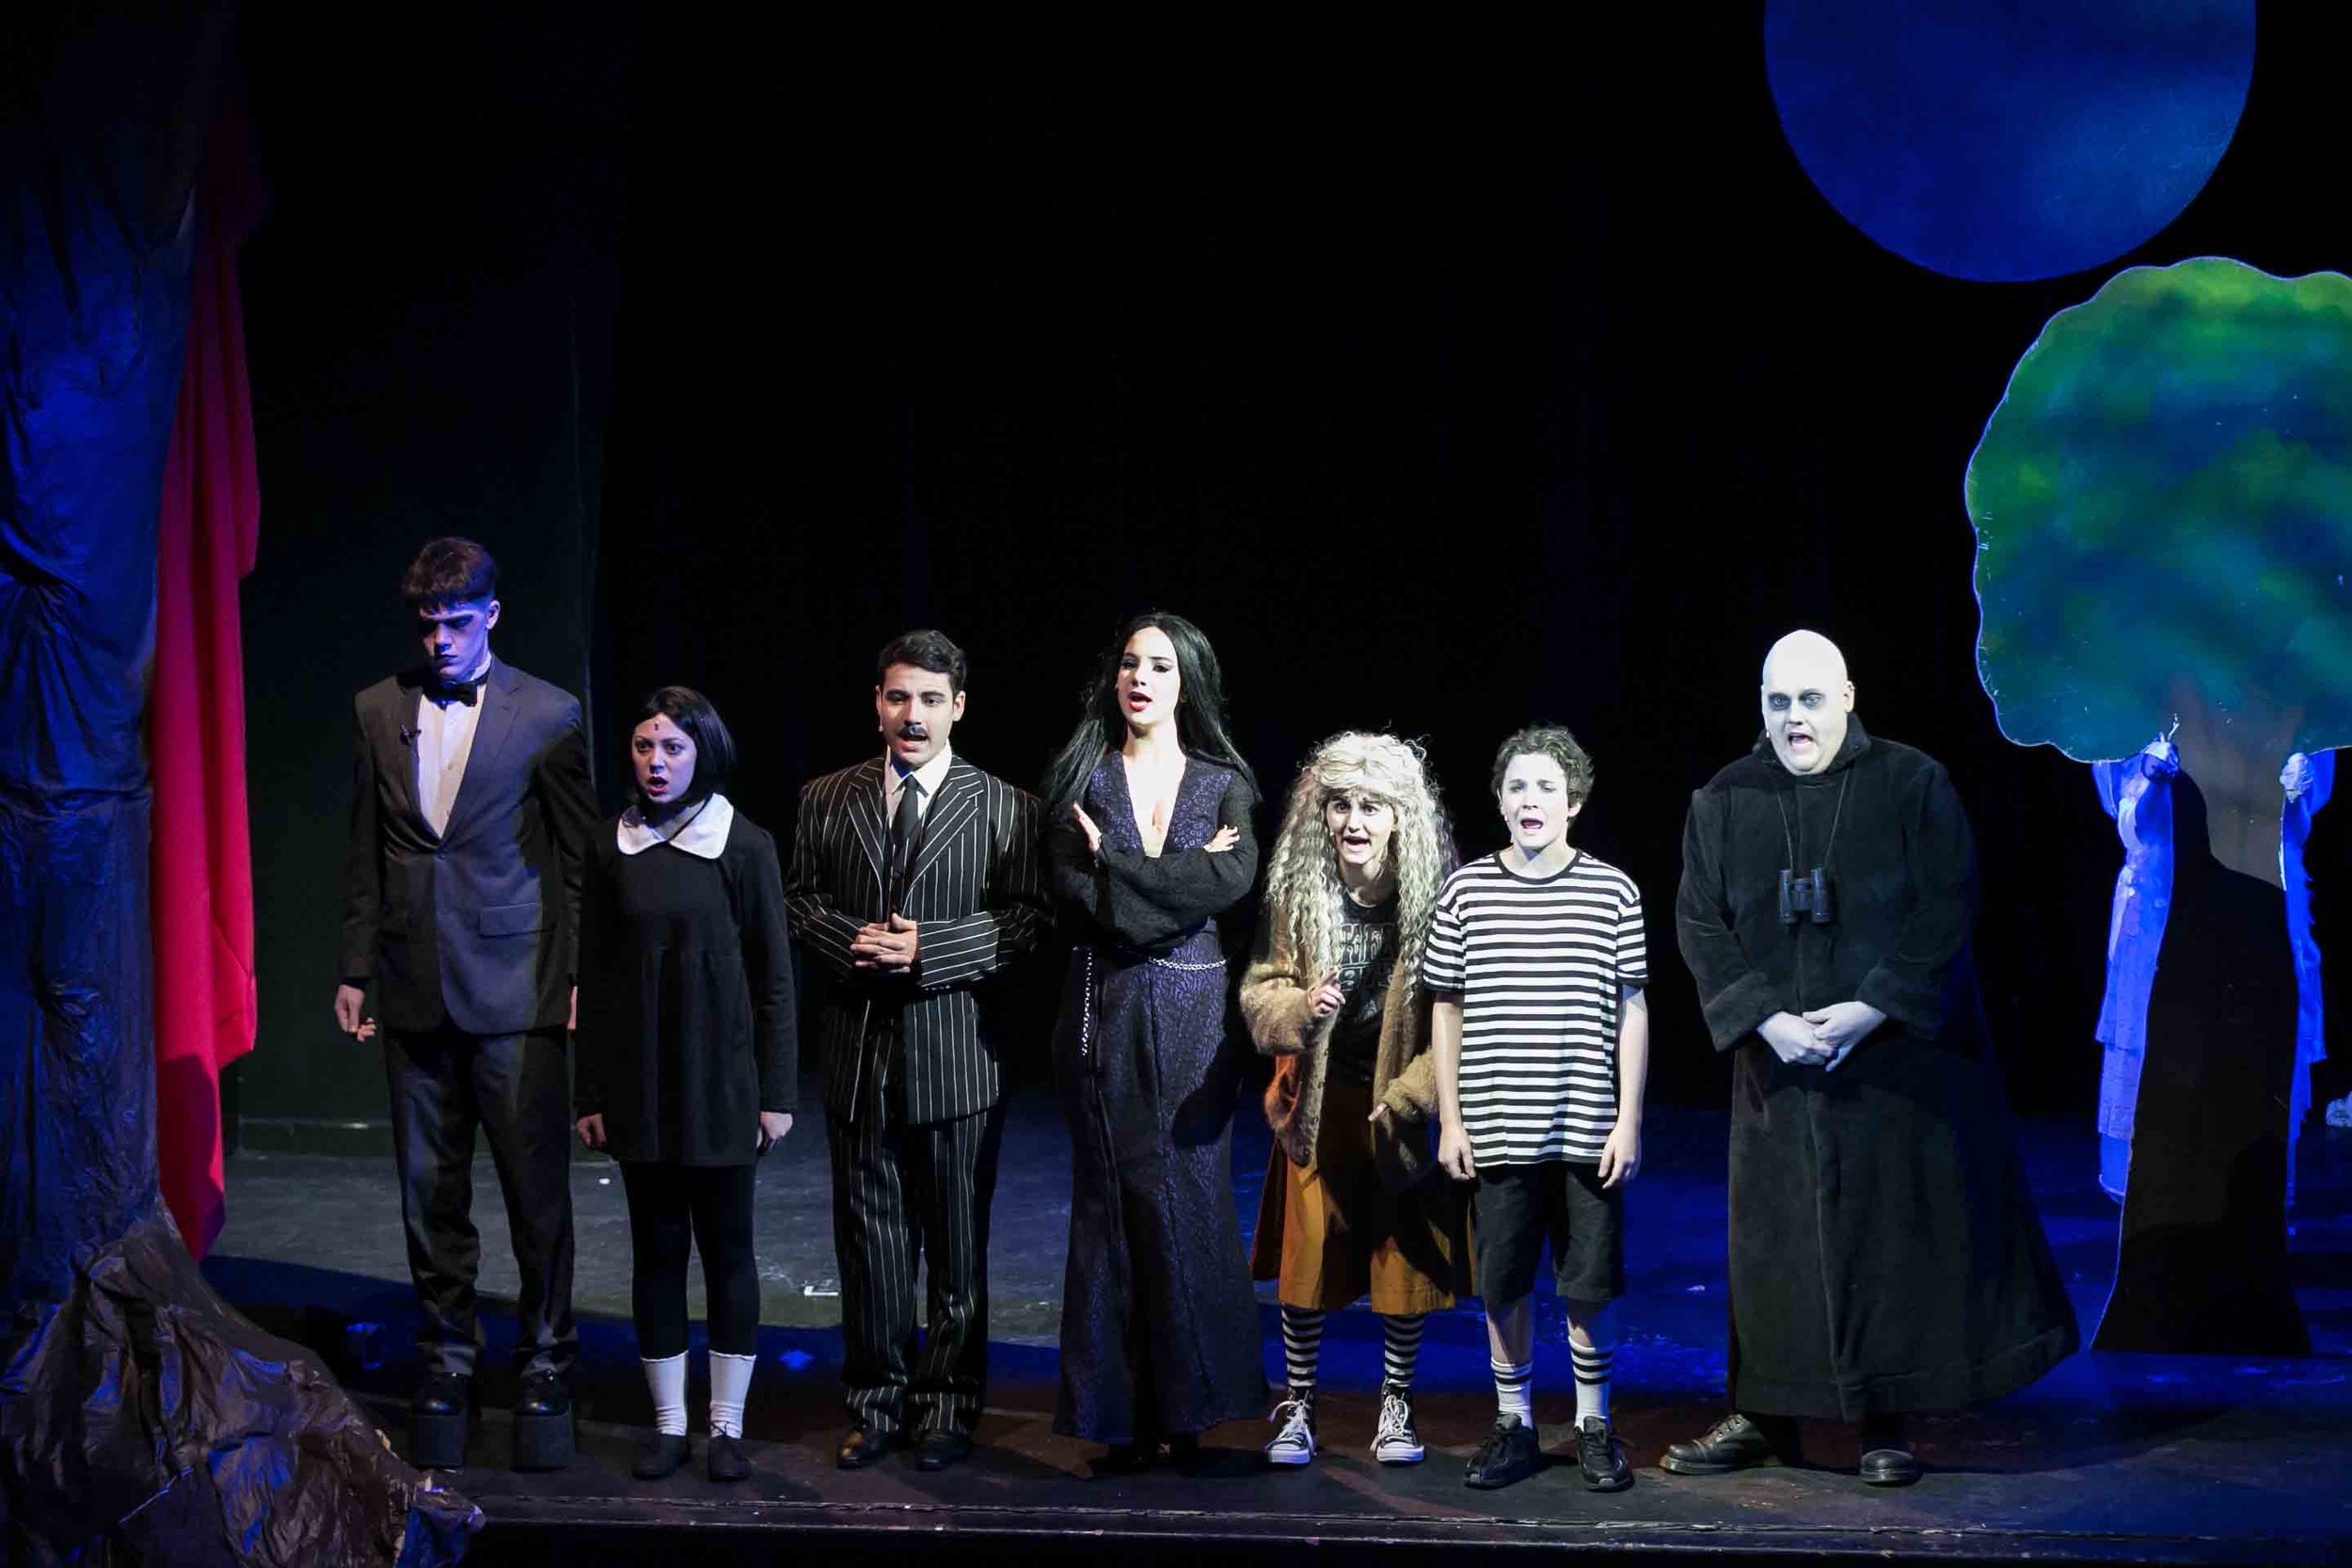 6-19-16 Addams Family Creepy Cast 0102.jpg